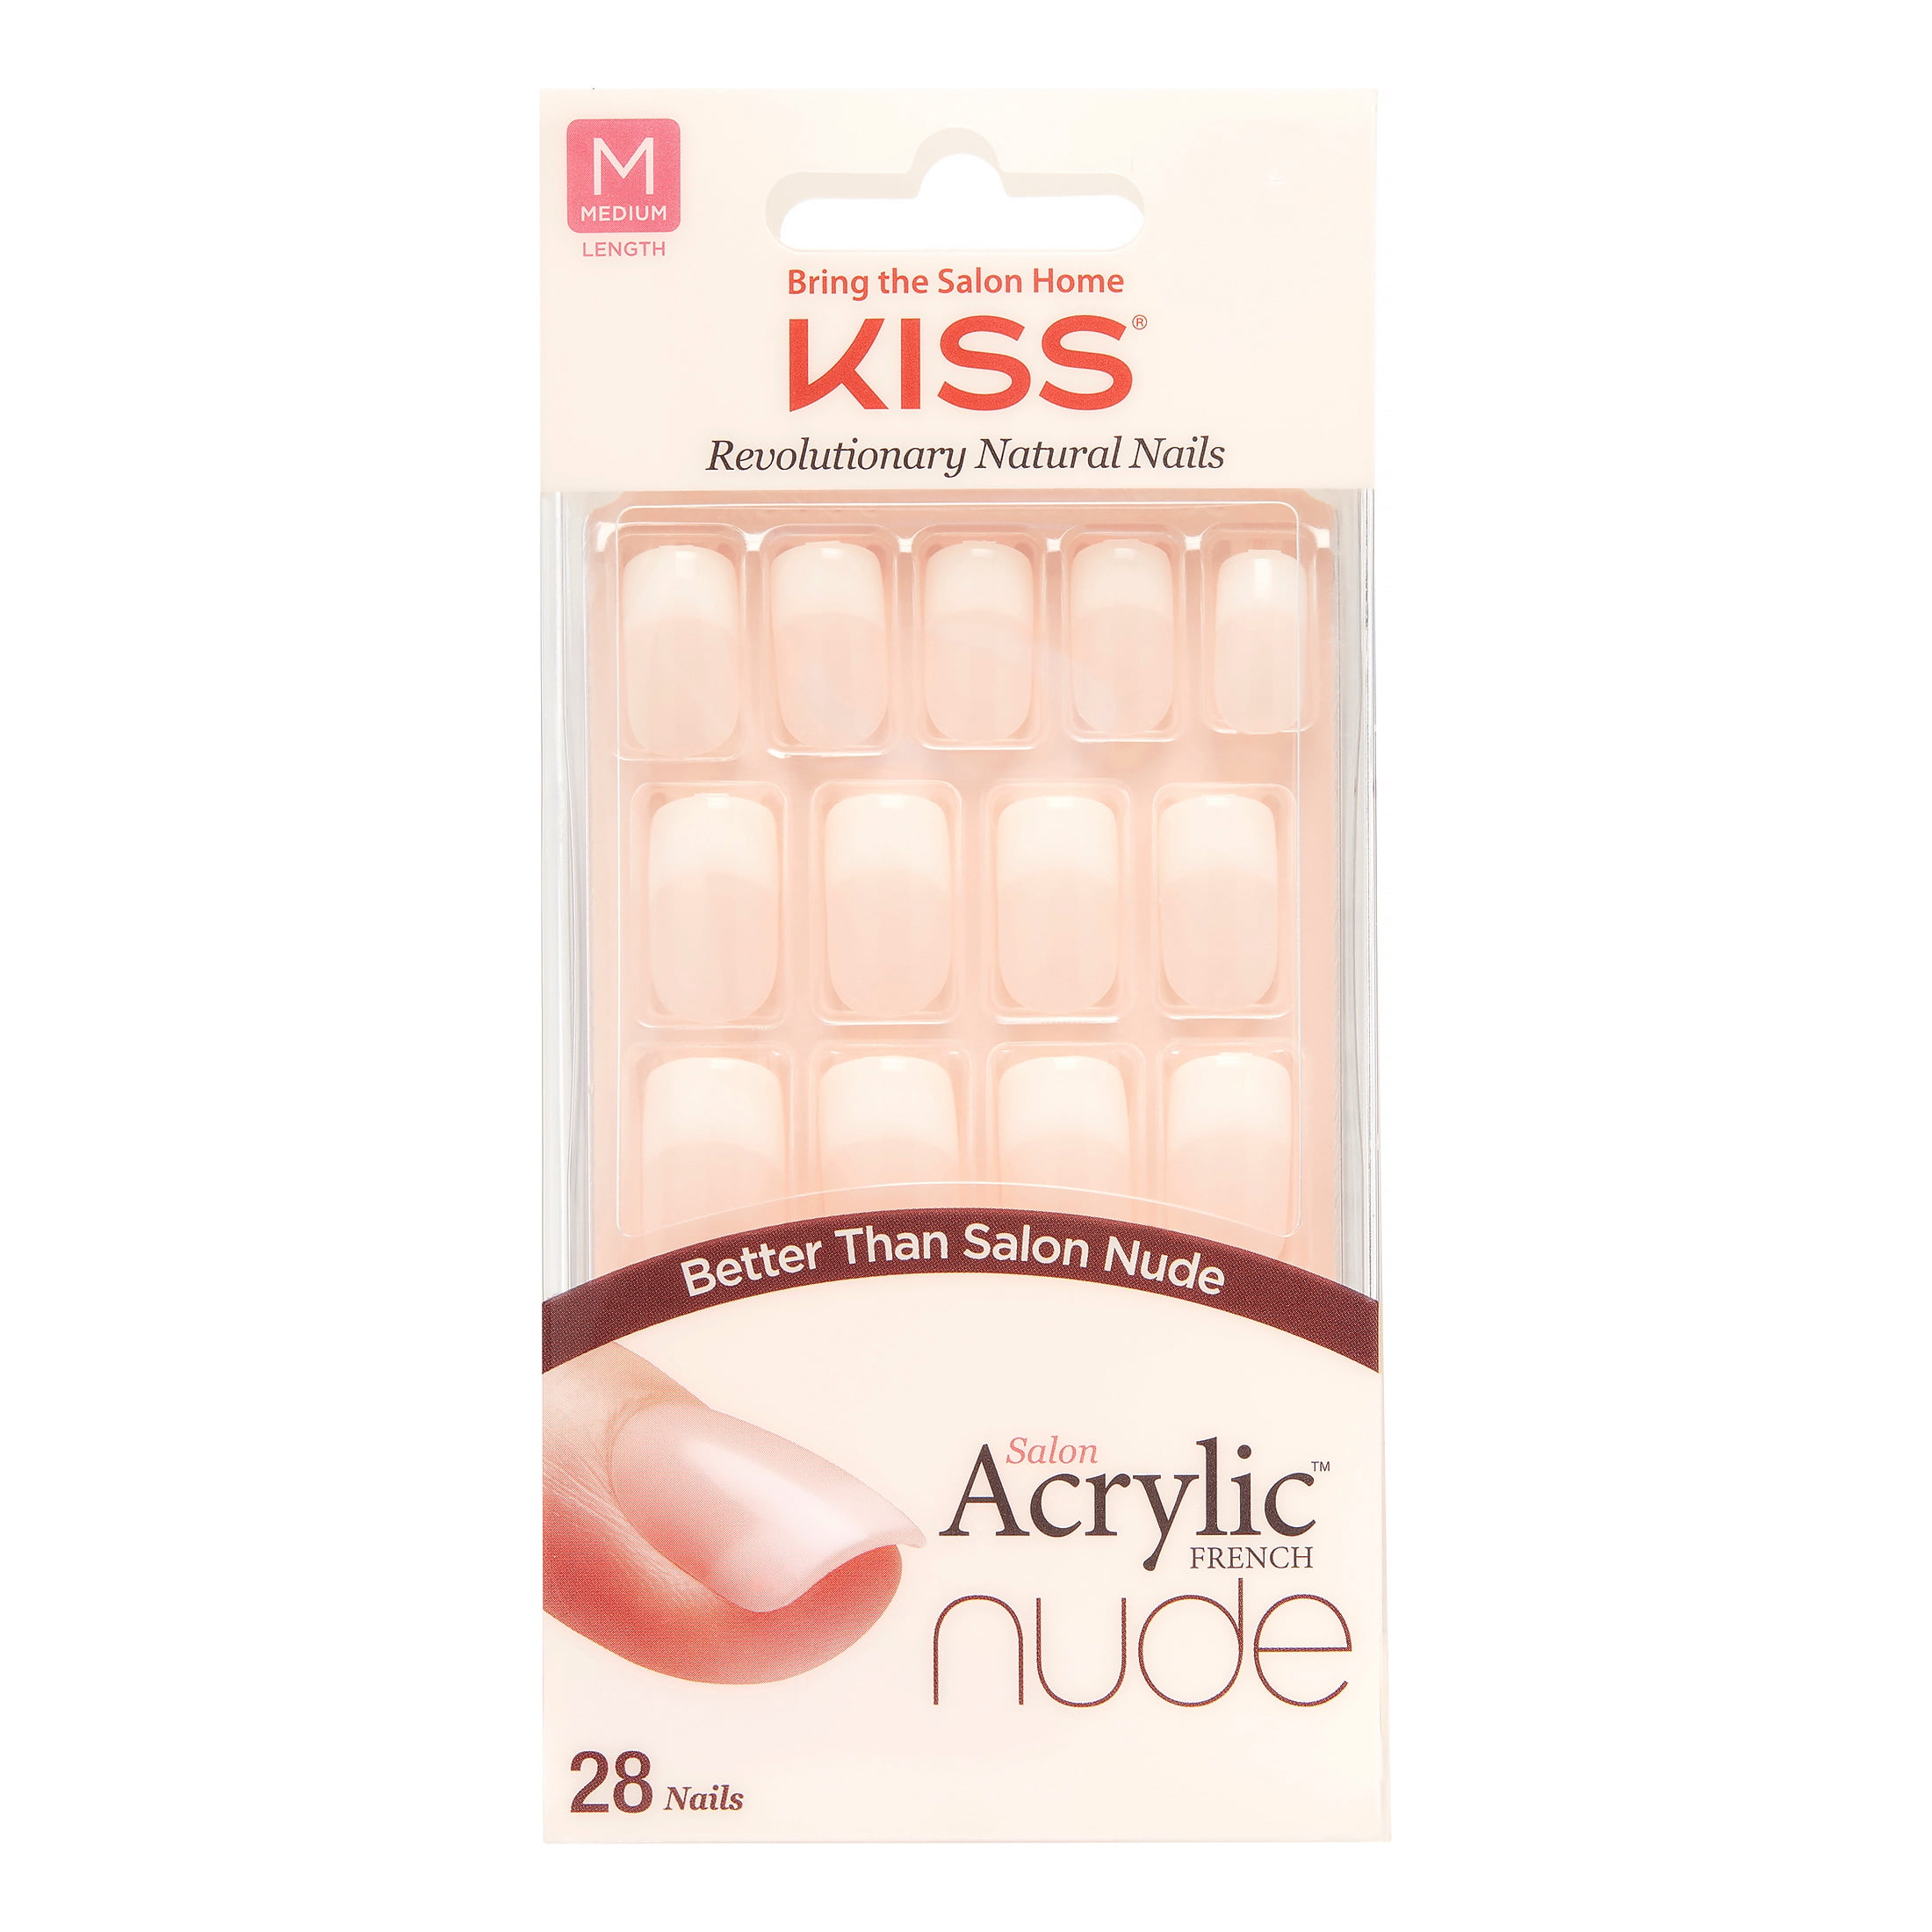 KISS Salon Acrylic Nude French Nails - Breathtaking